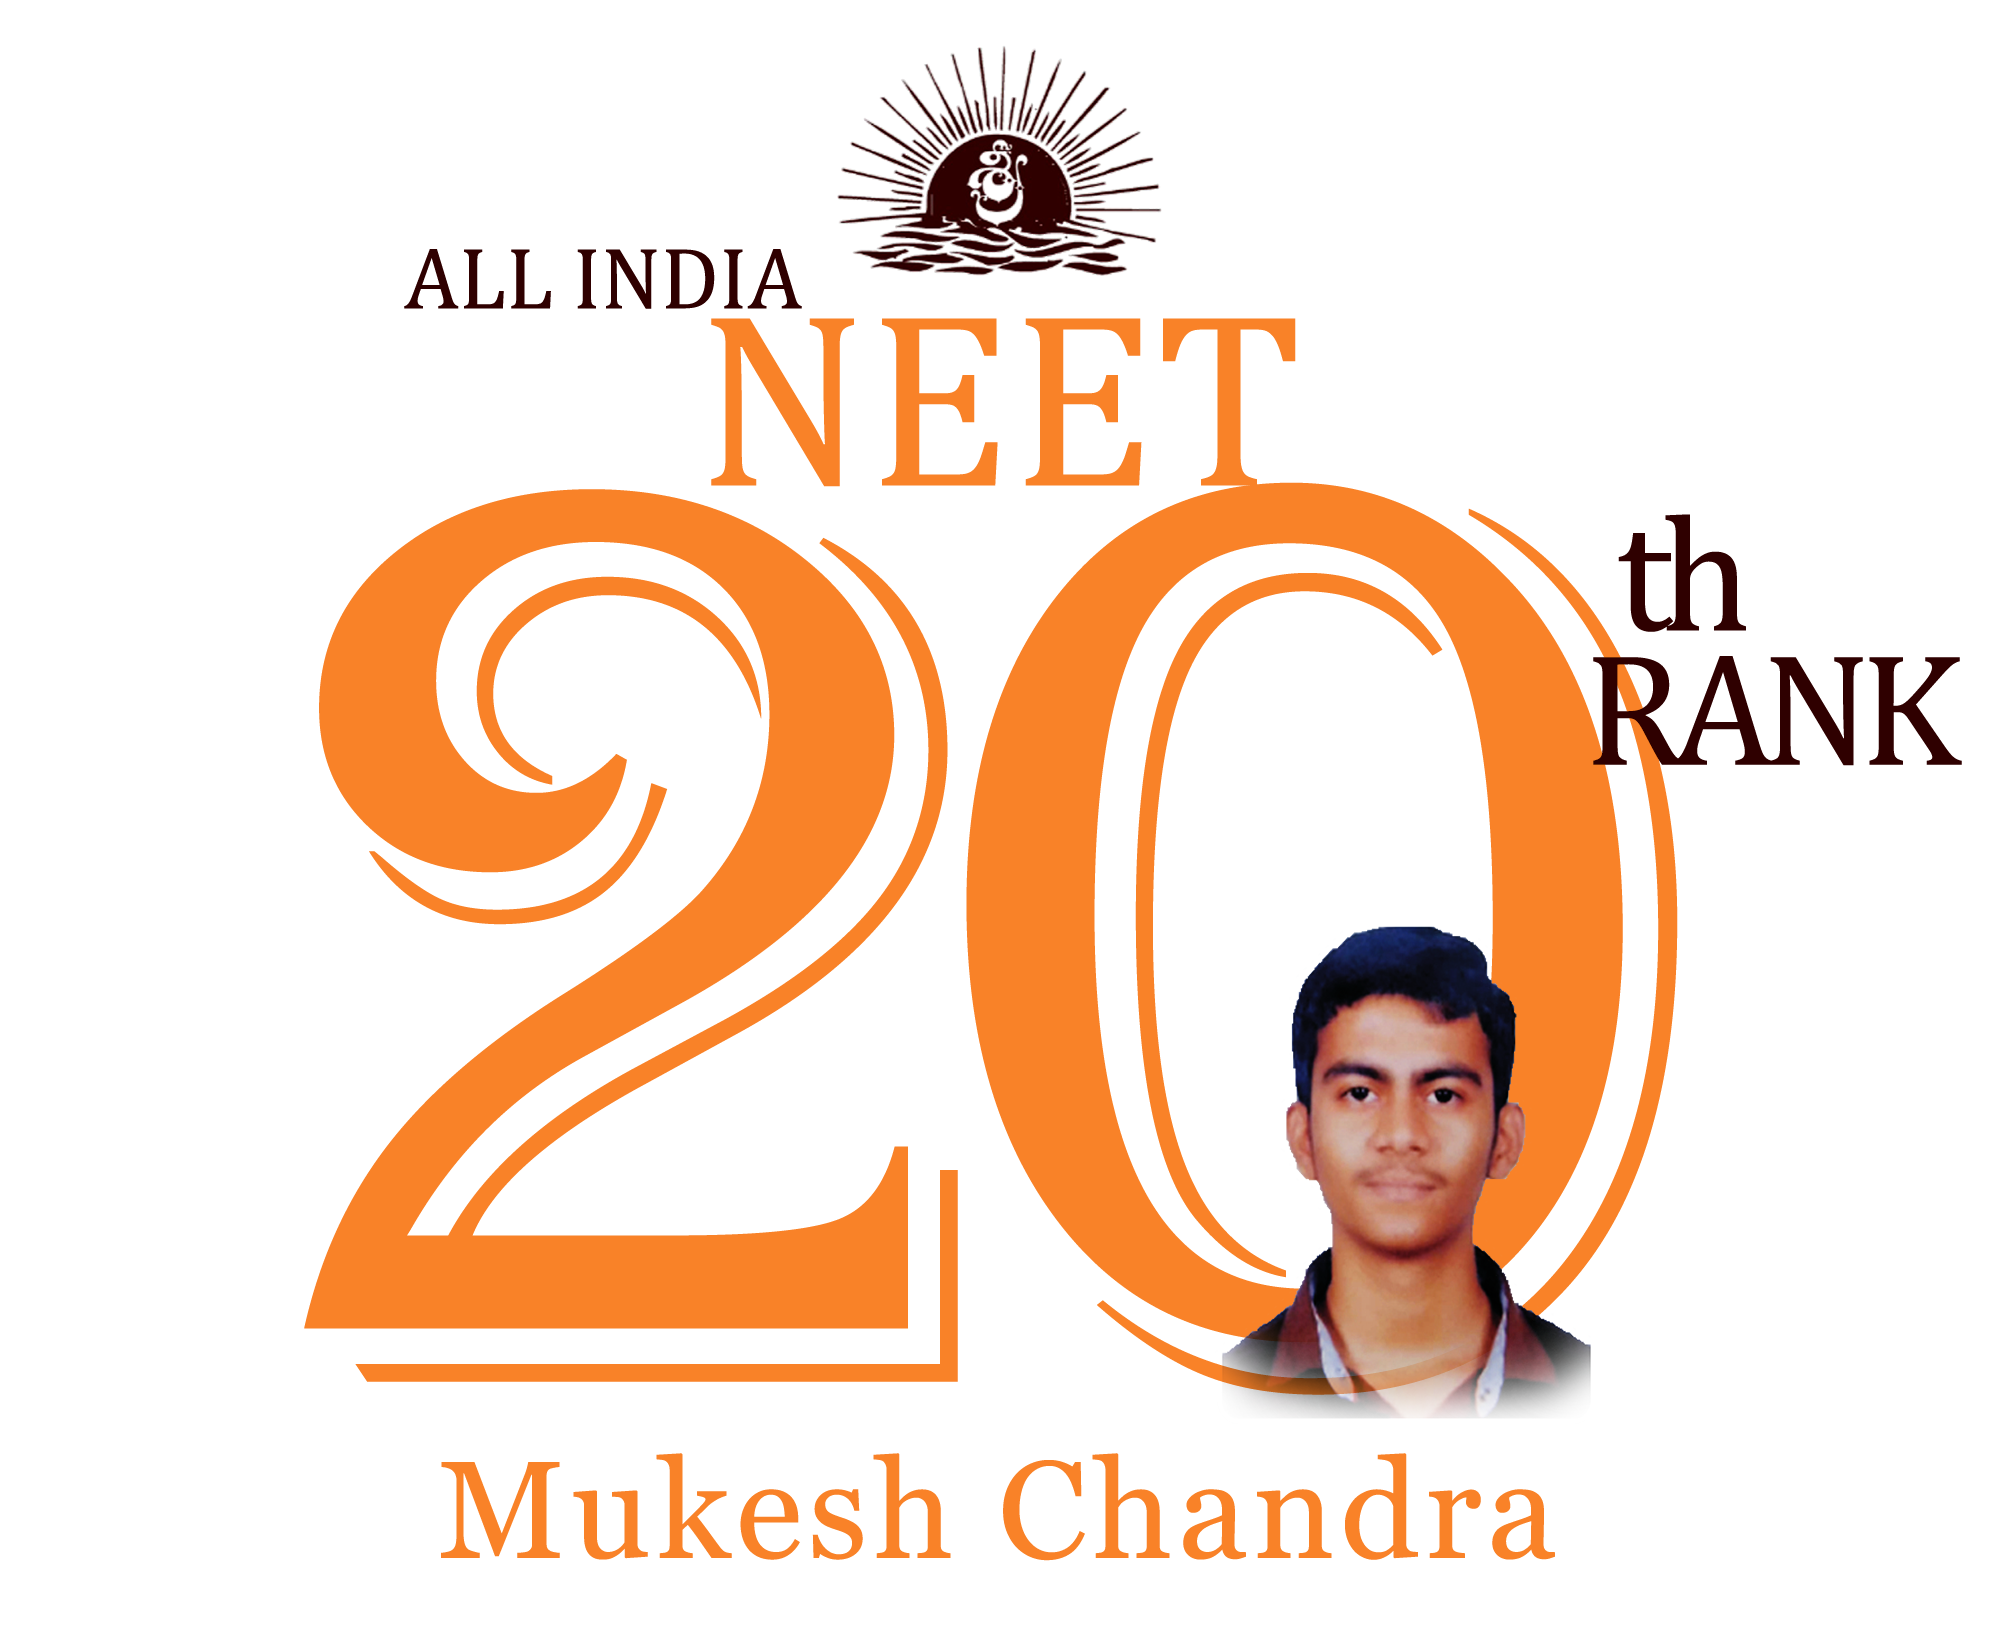 NEET, NEET Coaching Centres in Hyderabad, NEET Coaching in Hyderabad,NEET academy hyderabad, NEET Longterm coaching centre, NEET coaching Institute, top neet coaching centre in india